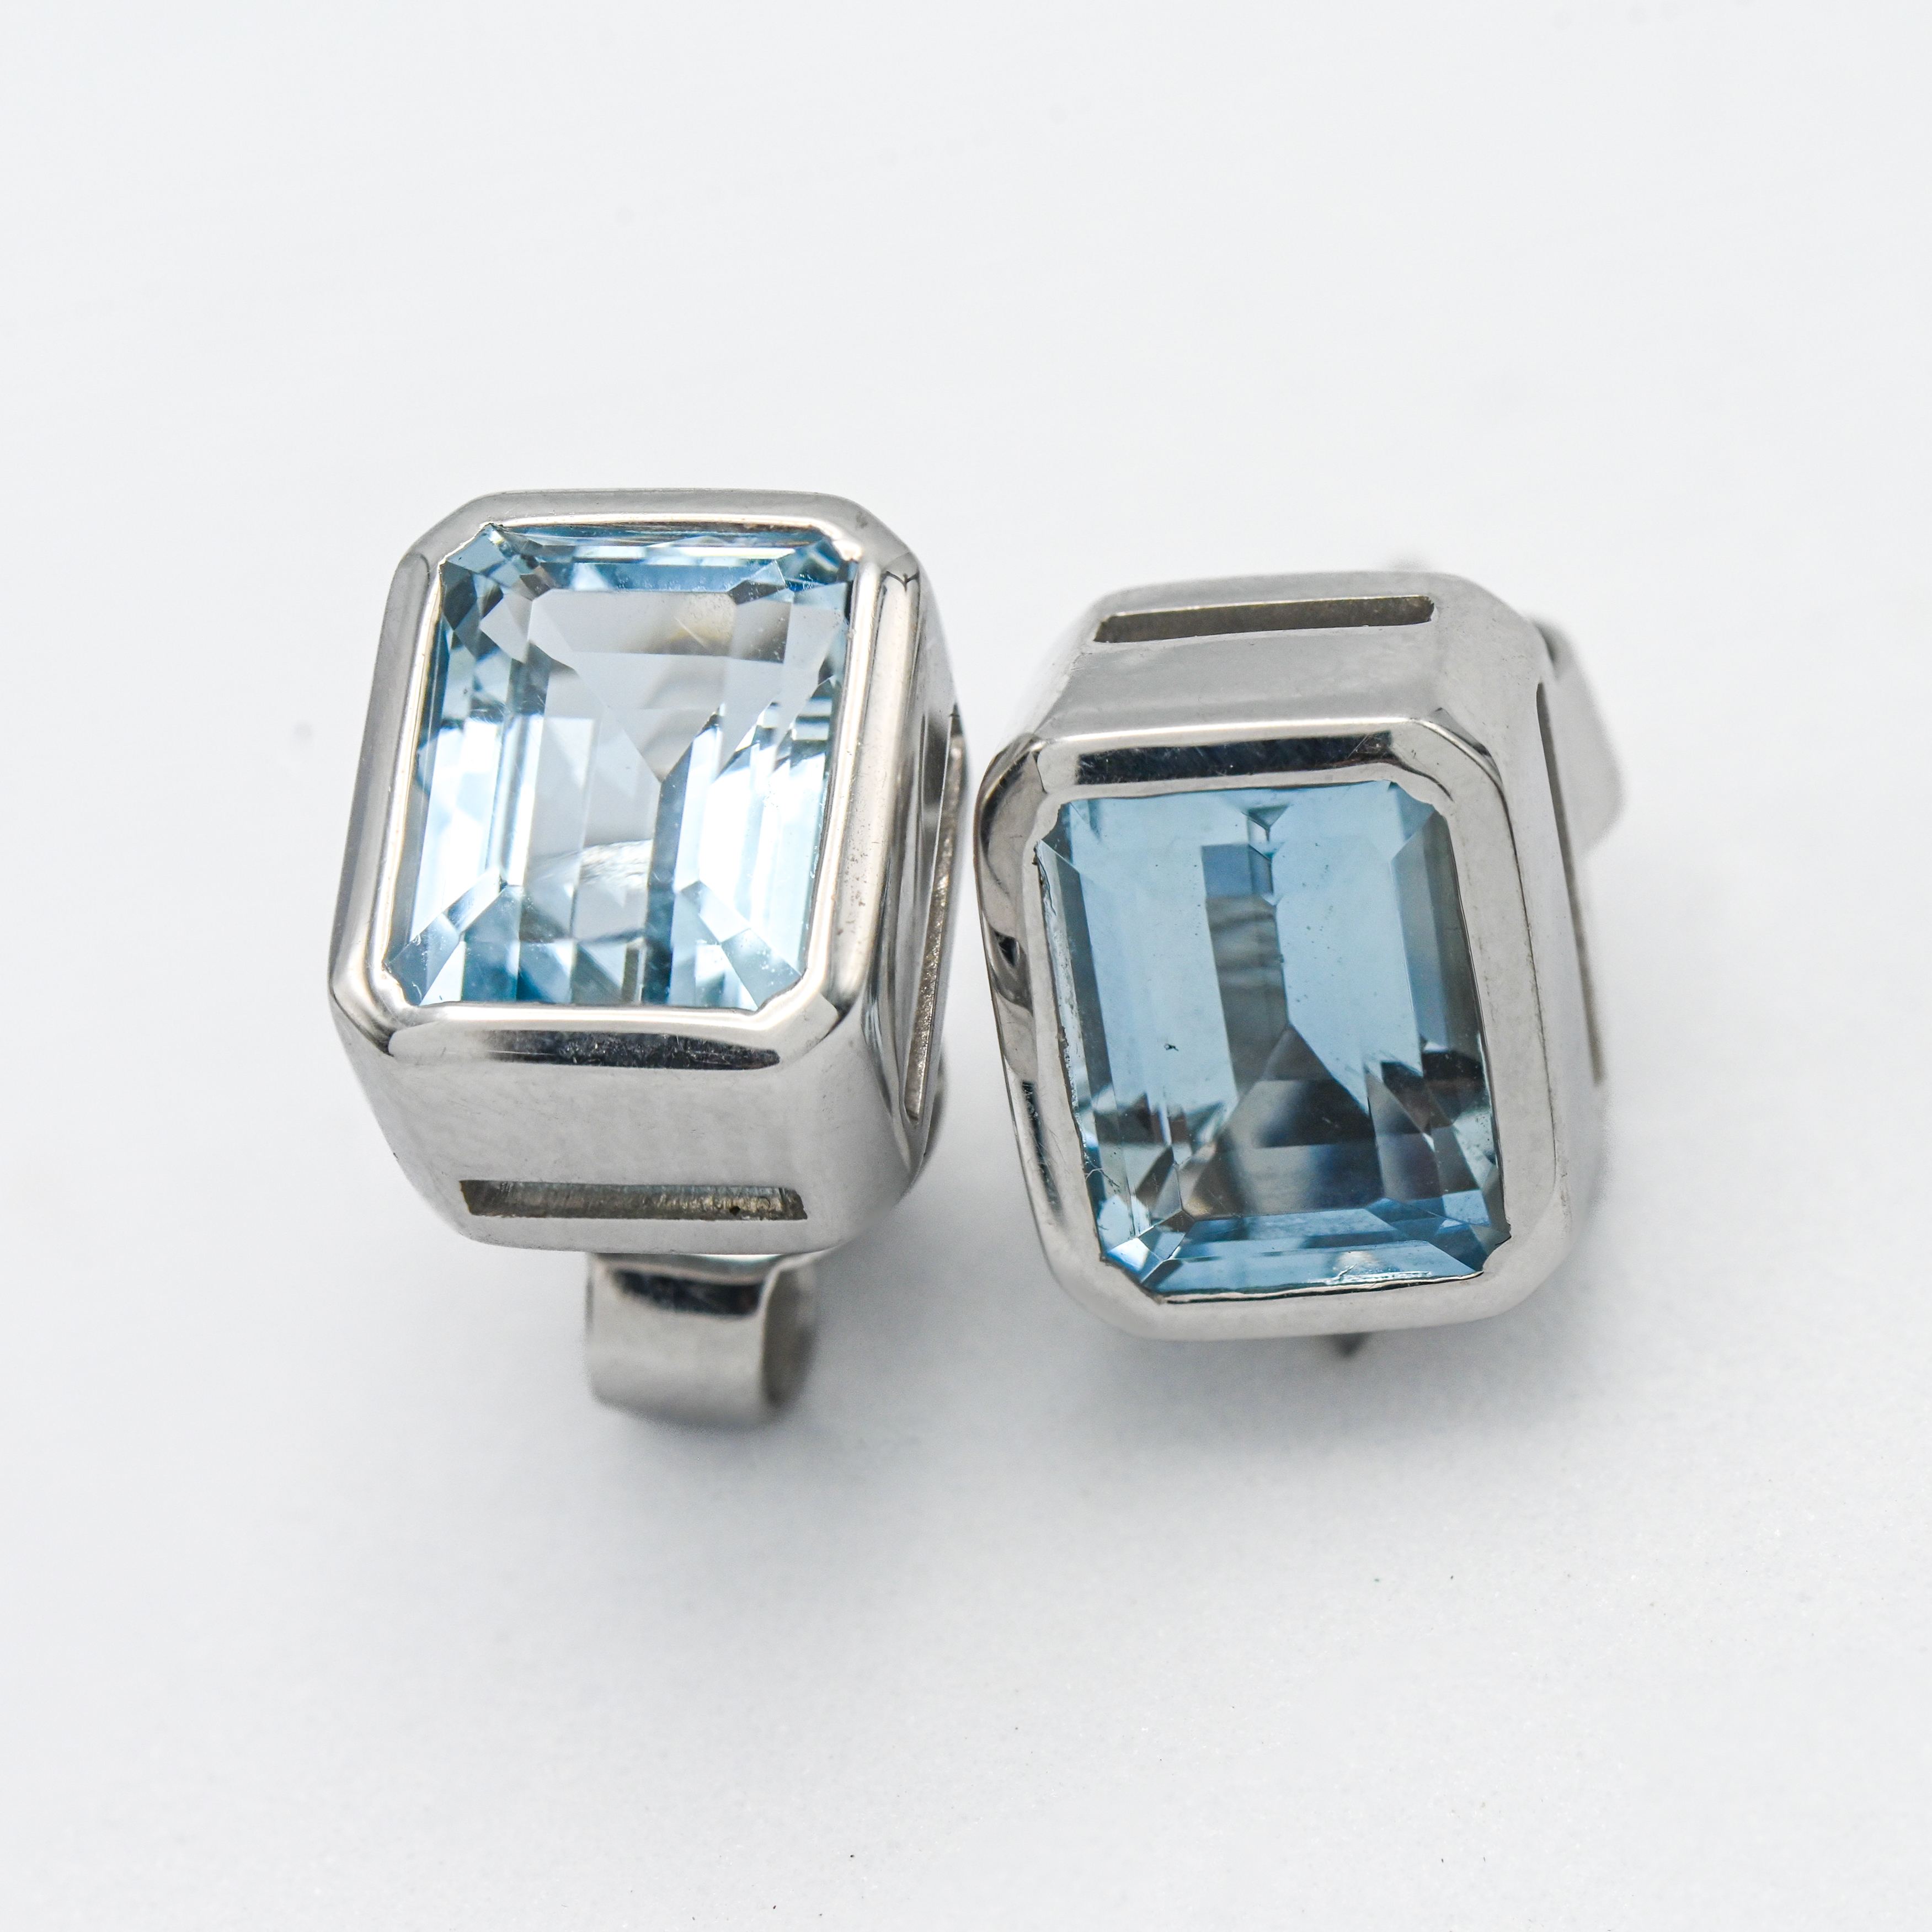 A pair of 18ct white gold emerald cut aquamarine designer stud earrings by Kojis.